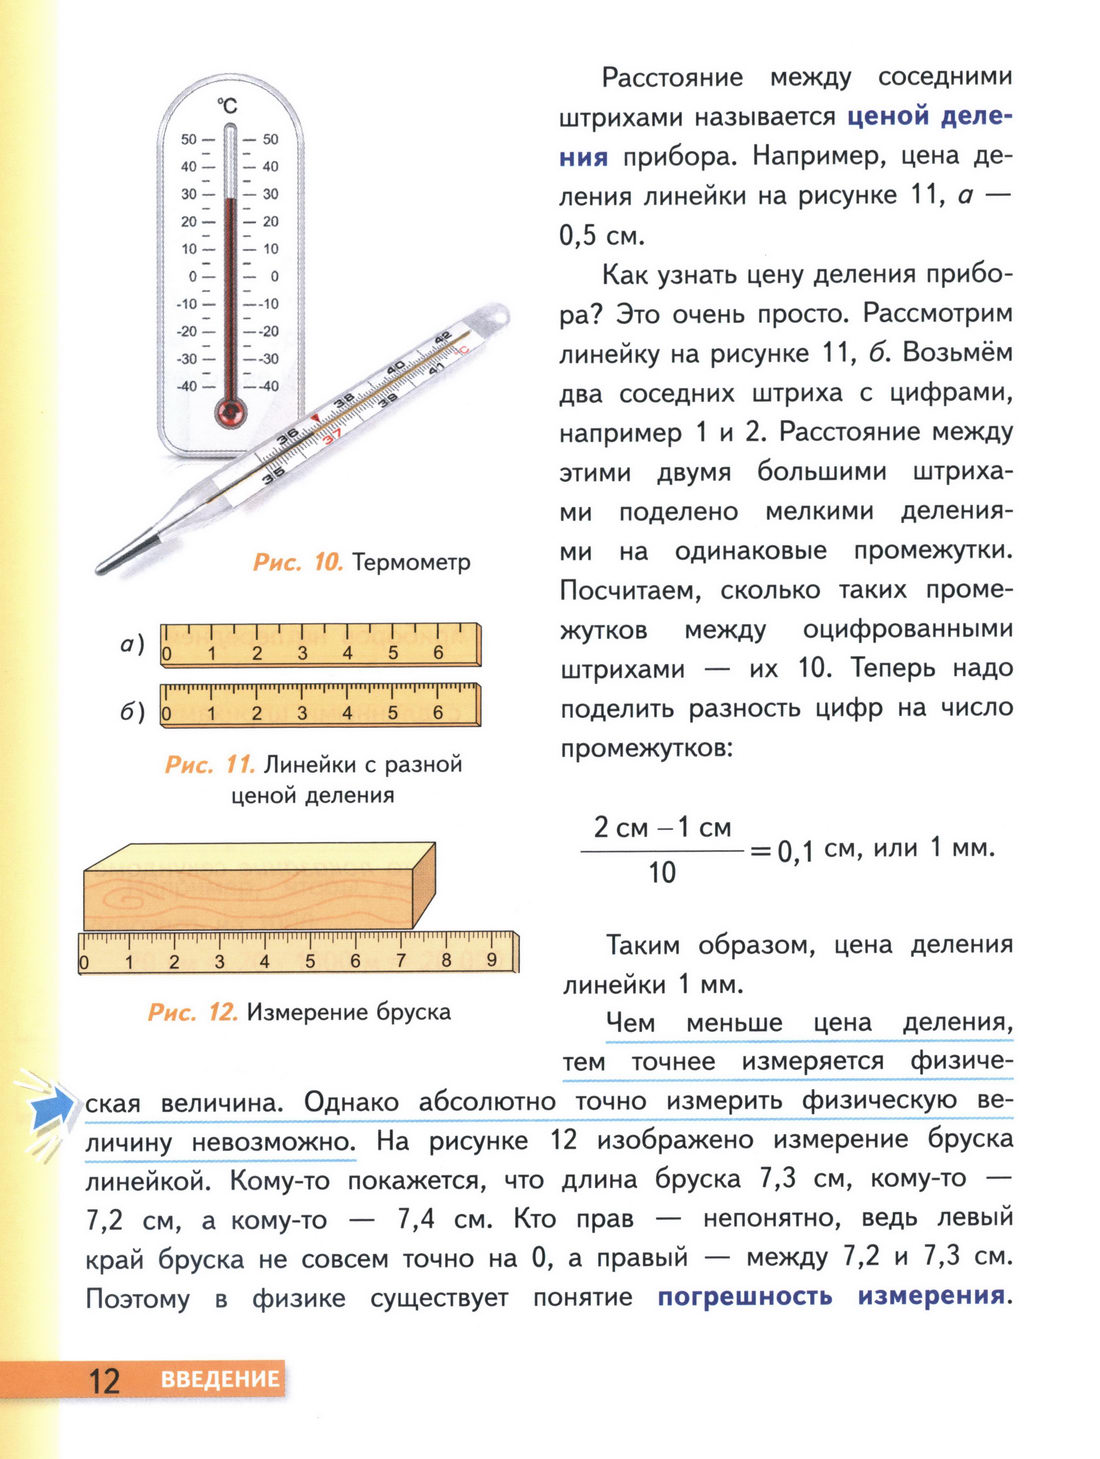 стр 12 учебник физики 7 класс параграф 5